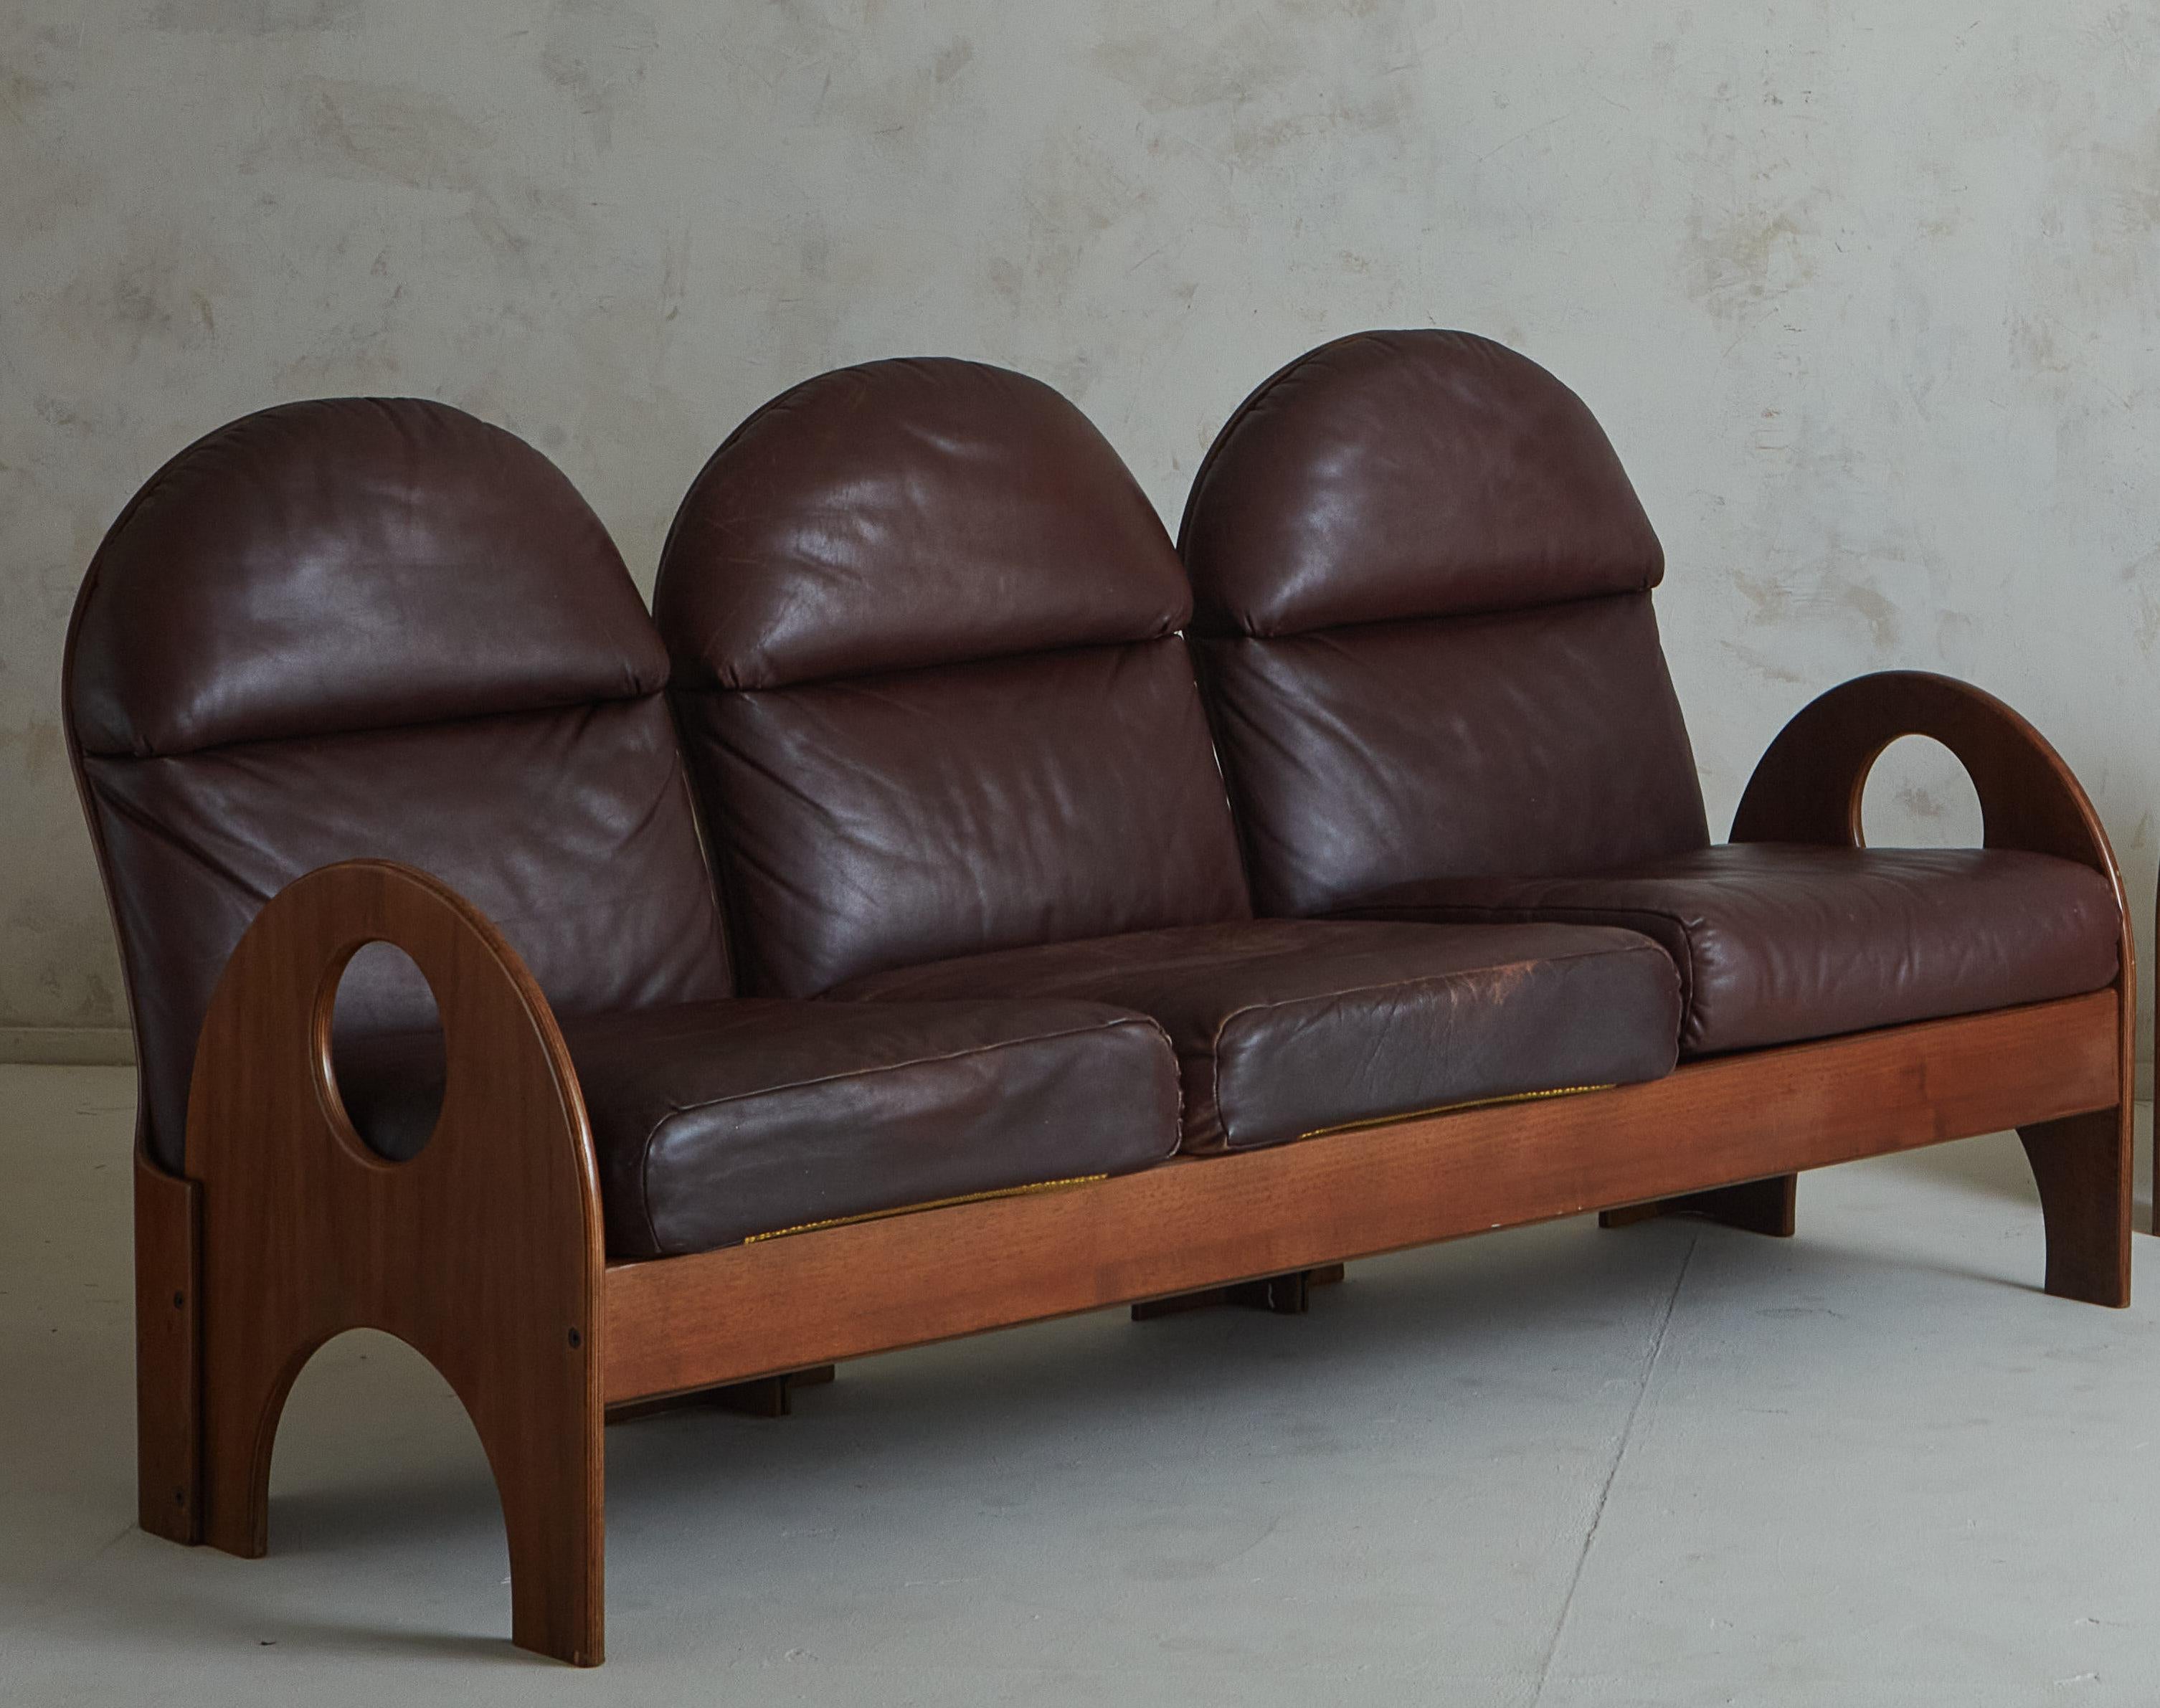 Walnut + Leather 3 Seat ‘Arcata’ Sofa by Gae Aulenti for Poltronova, Italy 1968 For Sale